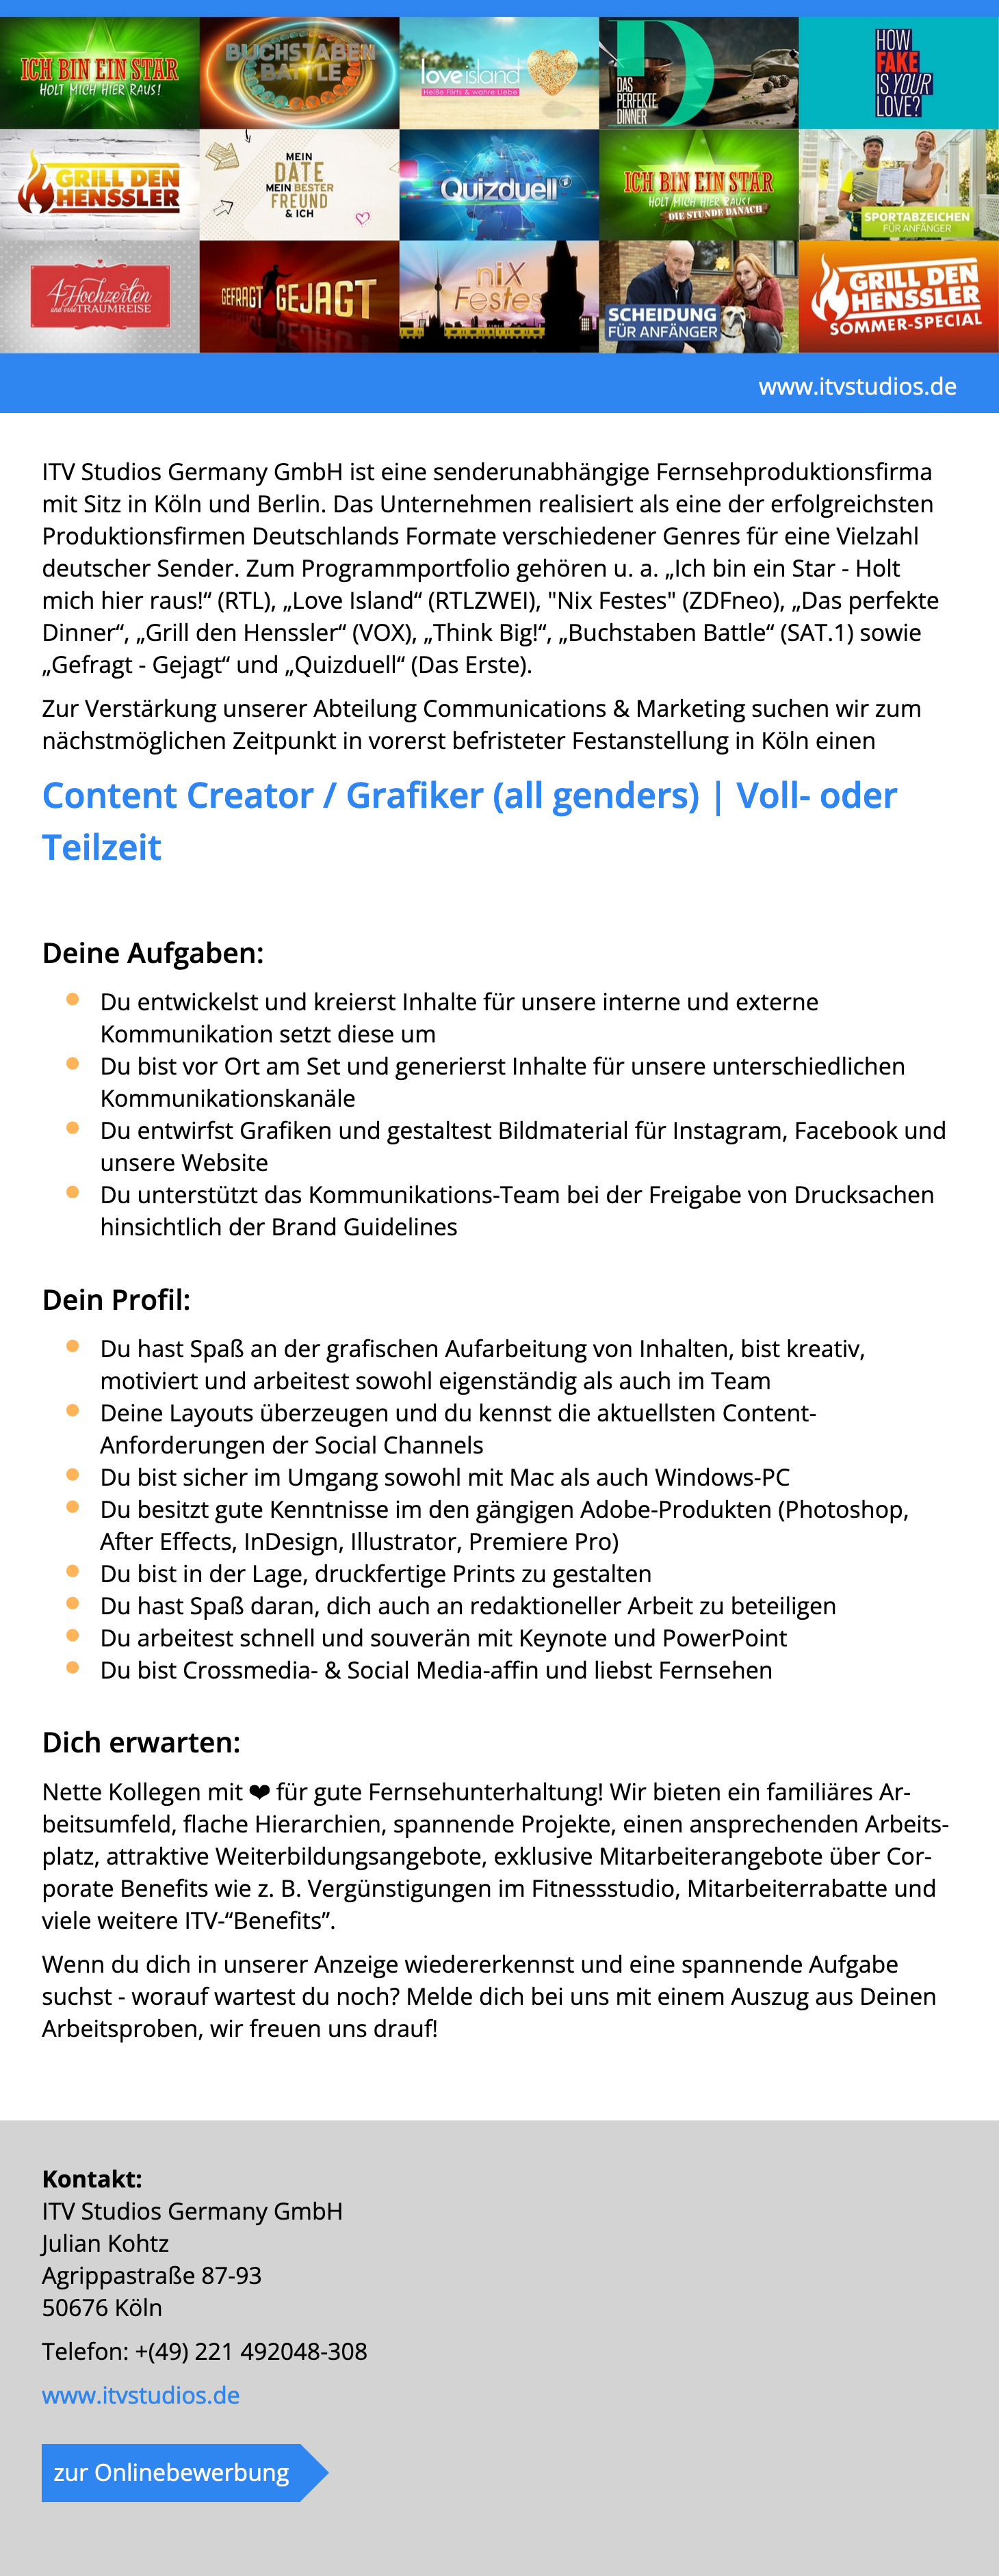 Content Creator / Grafiker (all genders) Voll- oder Teilzeit